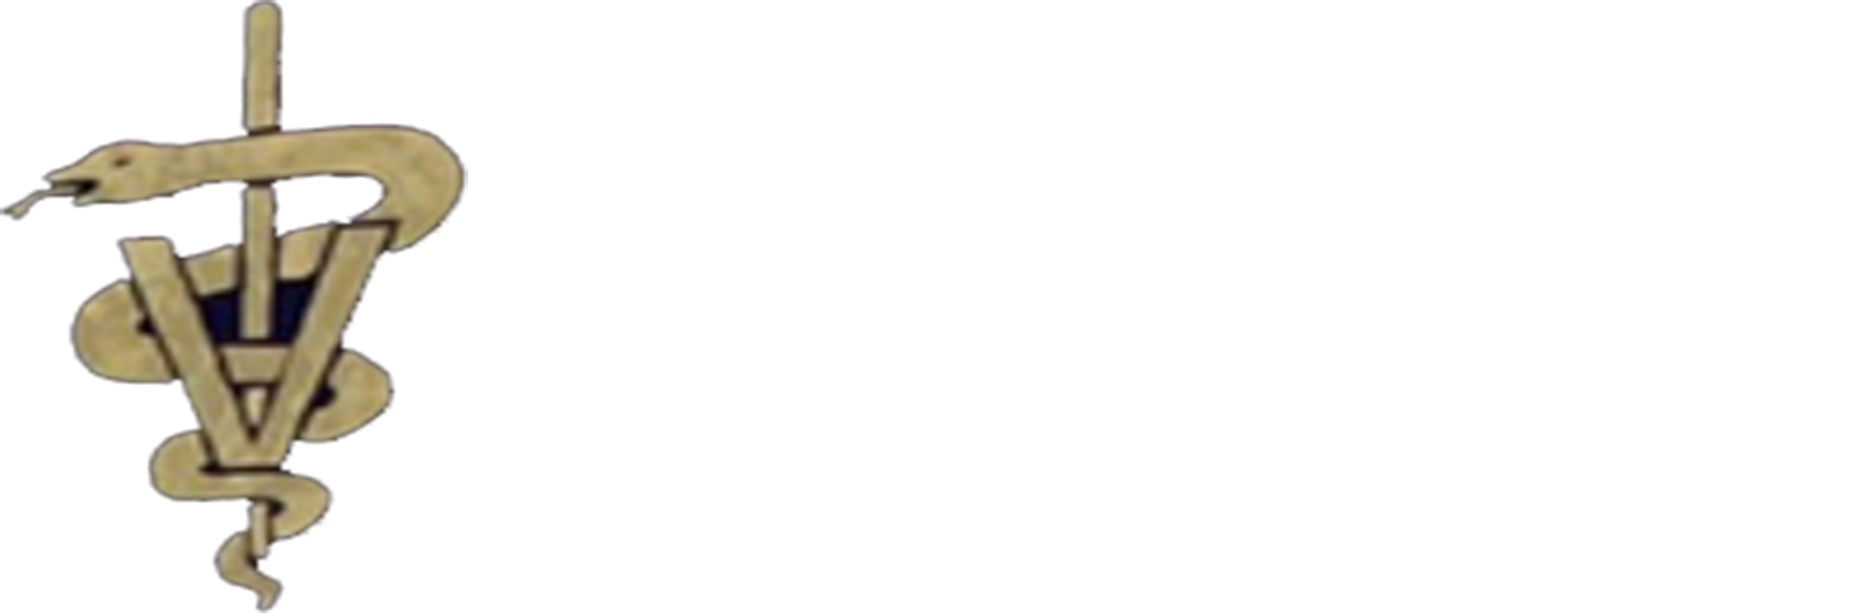 Litchfield Hills Veterinary Hospital logo